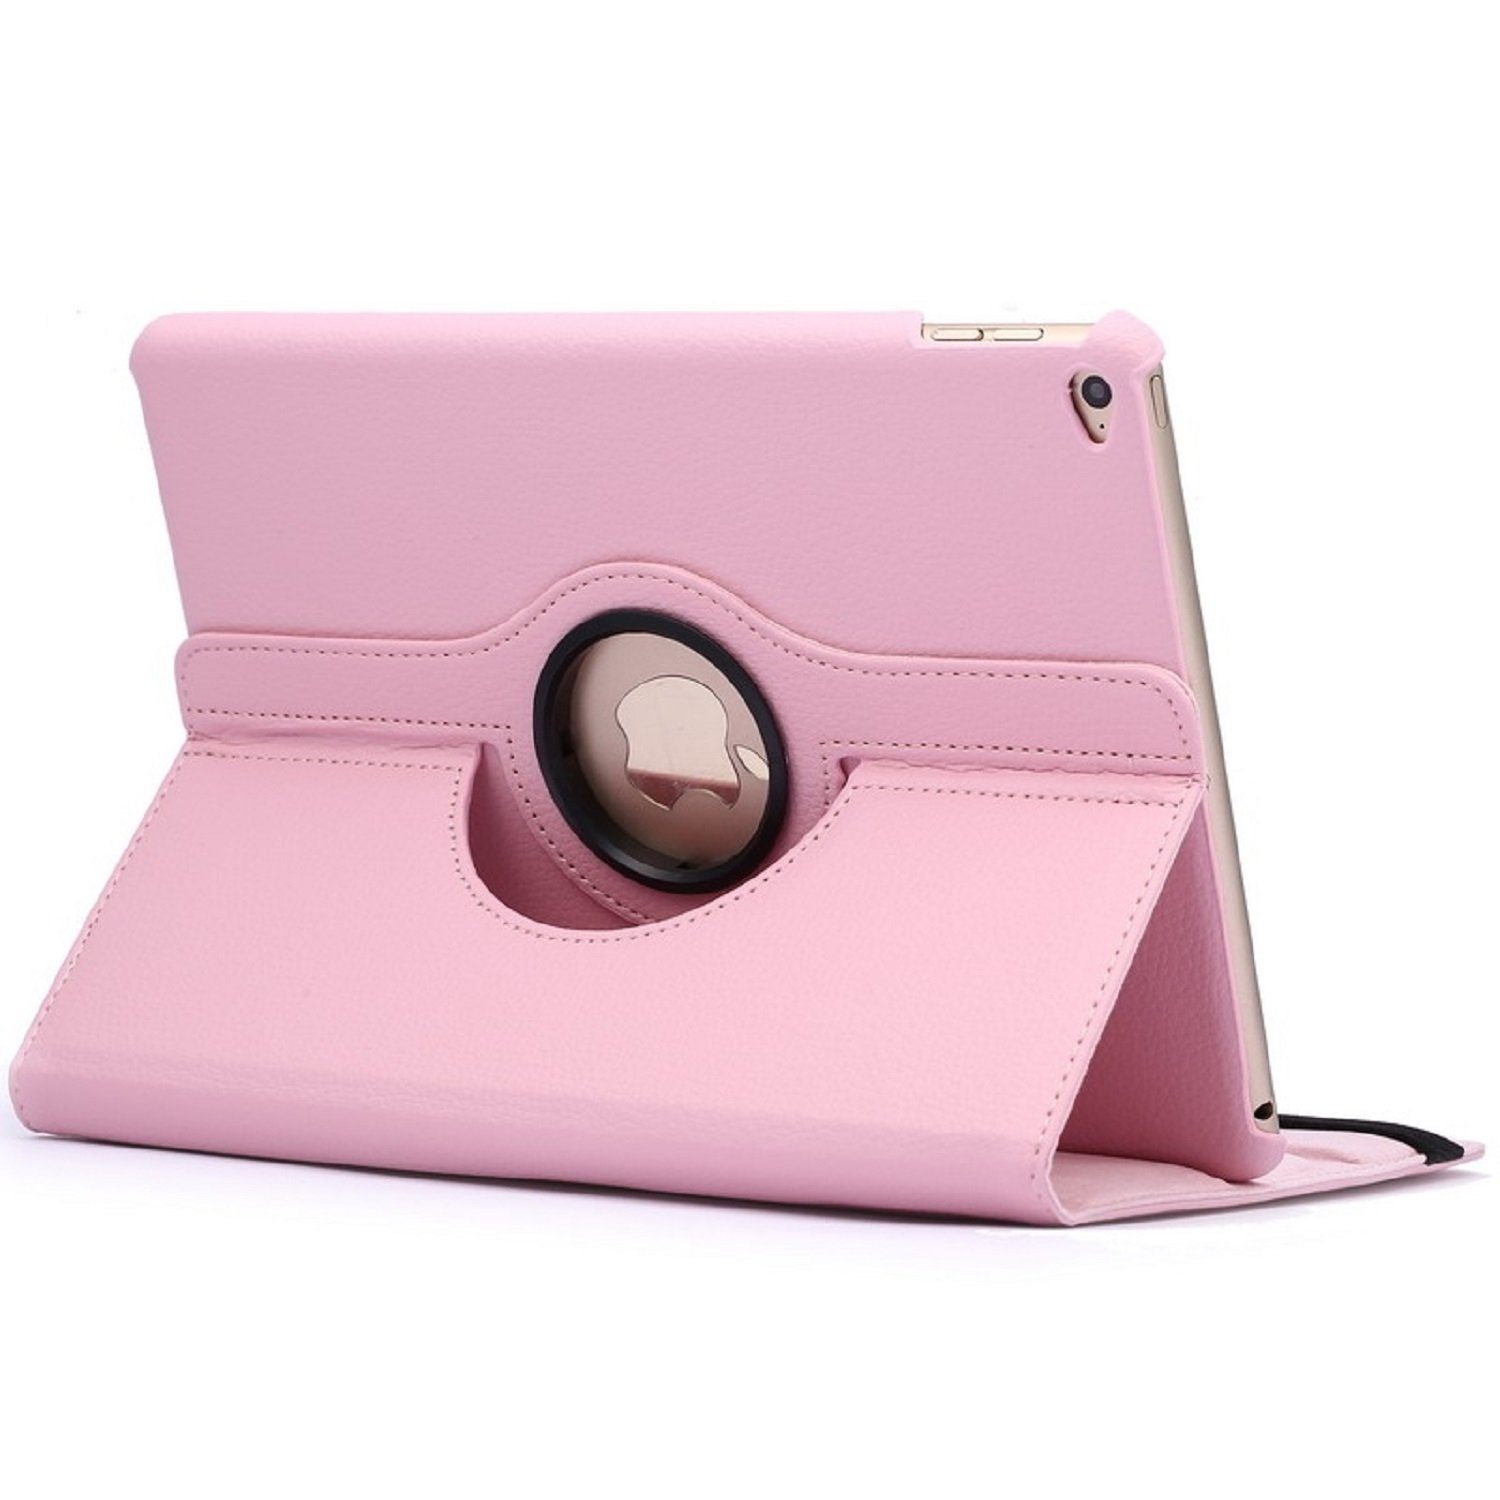 Protectorking Tablet-Hülle Schutzhülle für iPad Air Tablet Hülle Schutz  Tasche Case Cover Pink 9.7 Zoll, Tablet Schutzhülle mit Wakeup/Sleep 